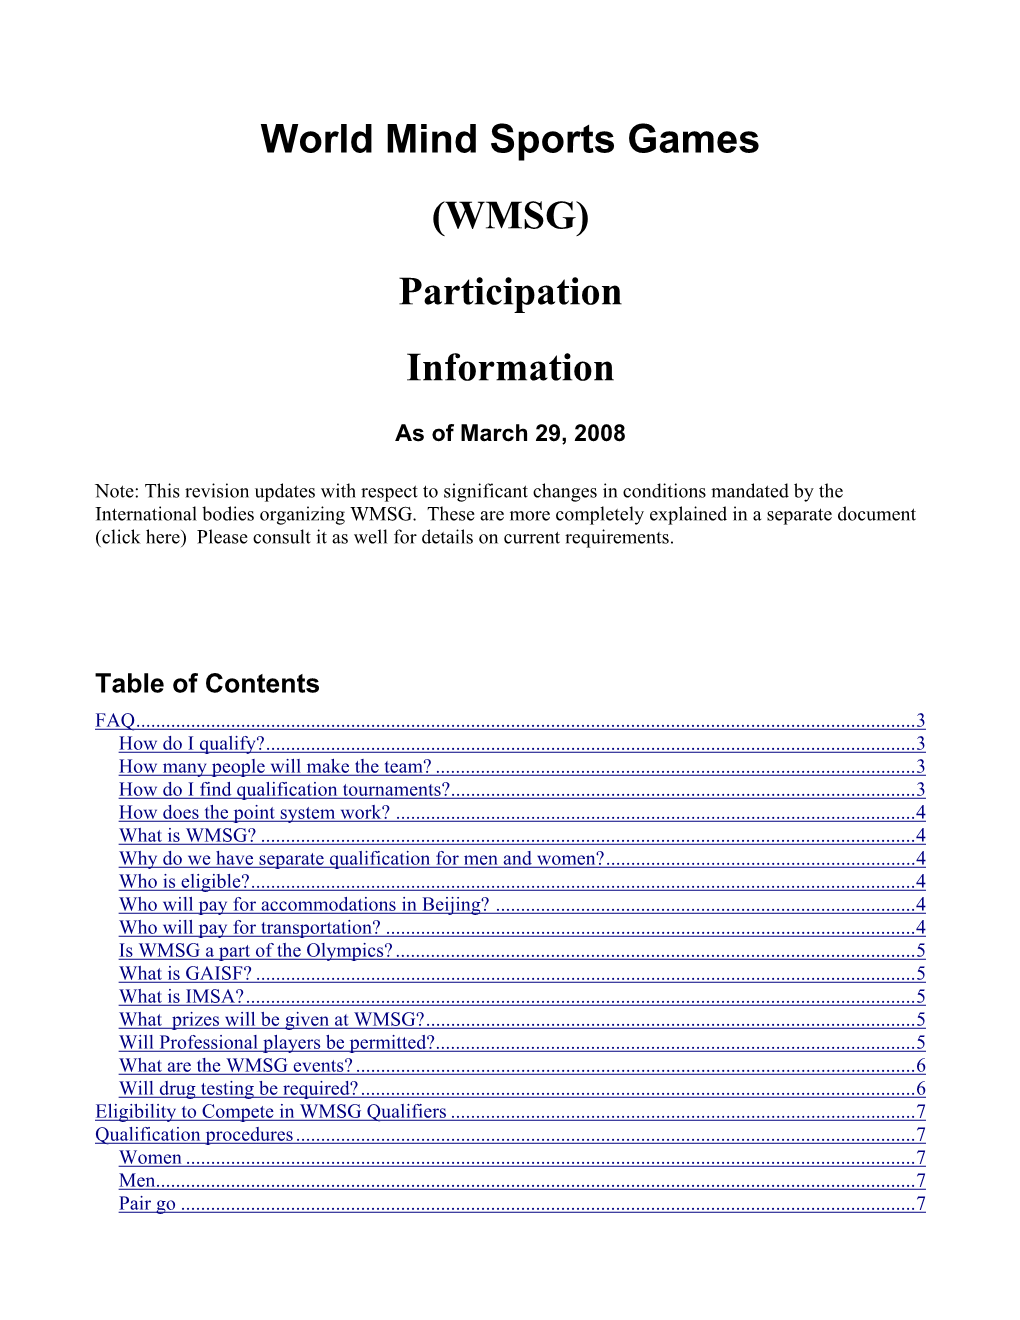 (WMSG) Participation Information